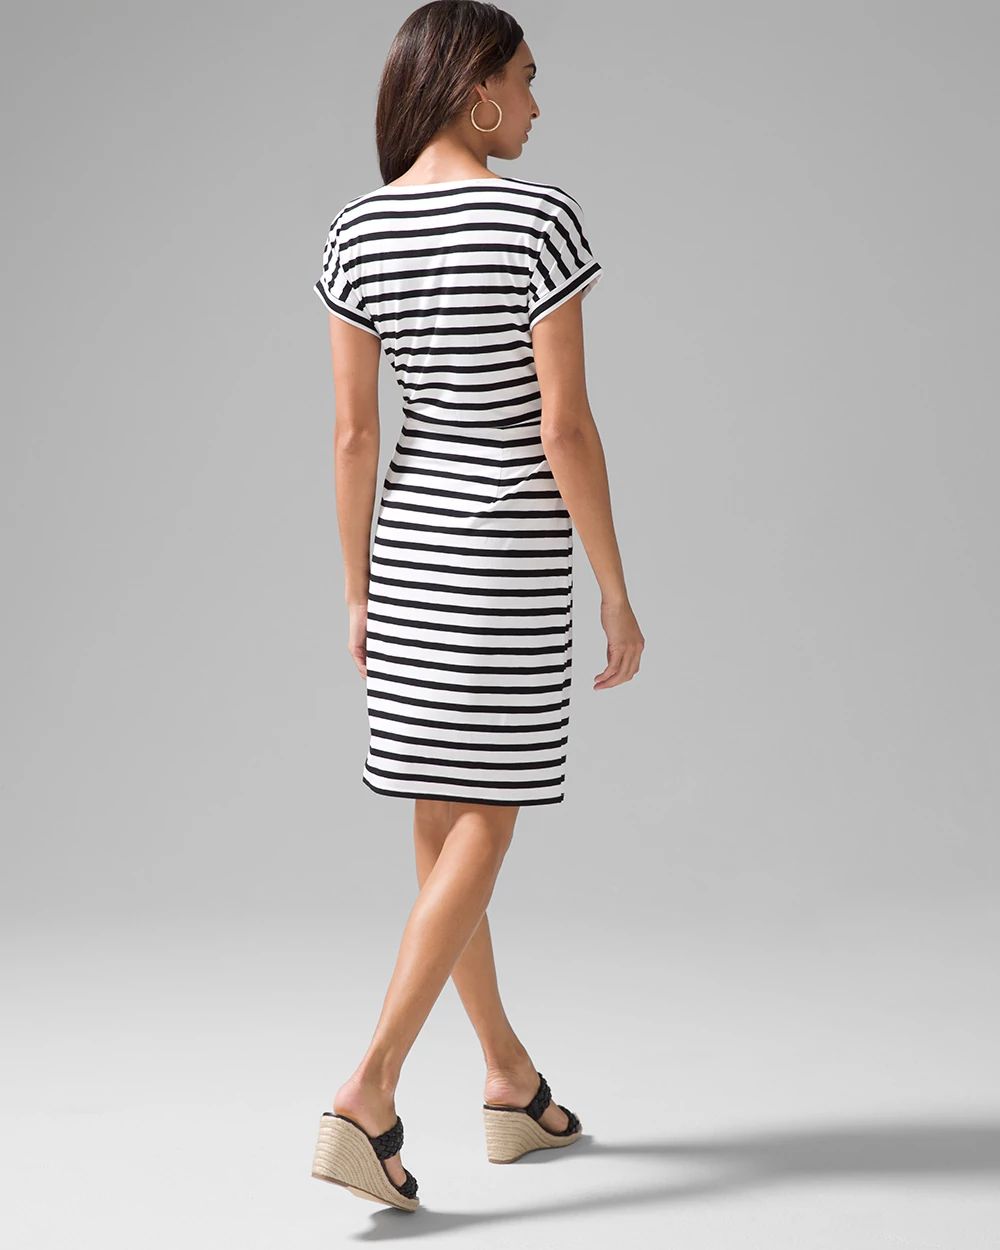 Short-sleeve Slub Mini Dress click to view larger image.